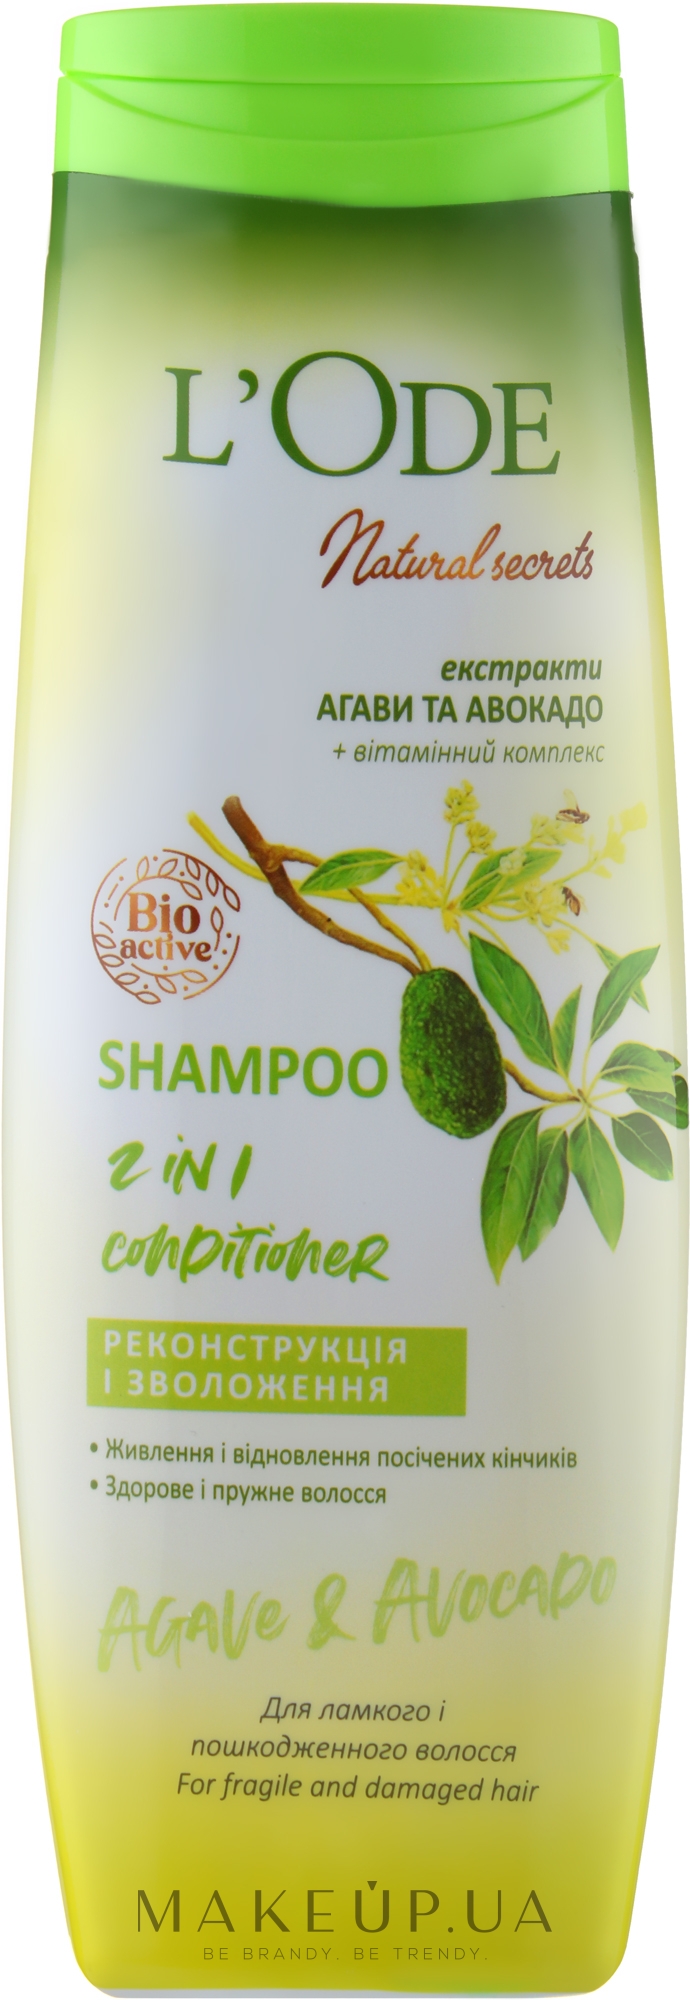 Шампунь-кондиціонер "Реконструкція й зволоження" для ламкого й пошкодженого волосся - L'Ode Natural Secrets Shampoo 2 In 1 Conditioner Agave & Avocado — фото 400ml